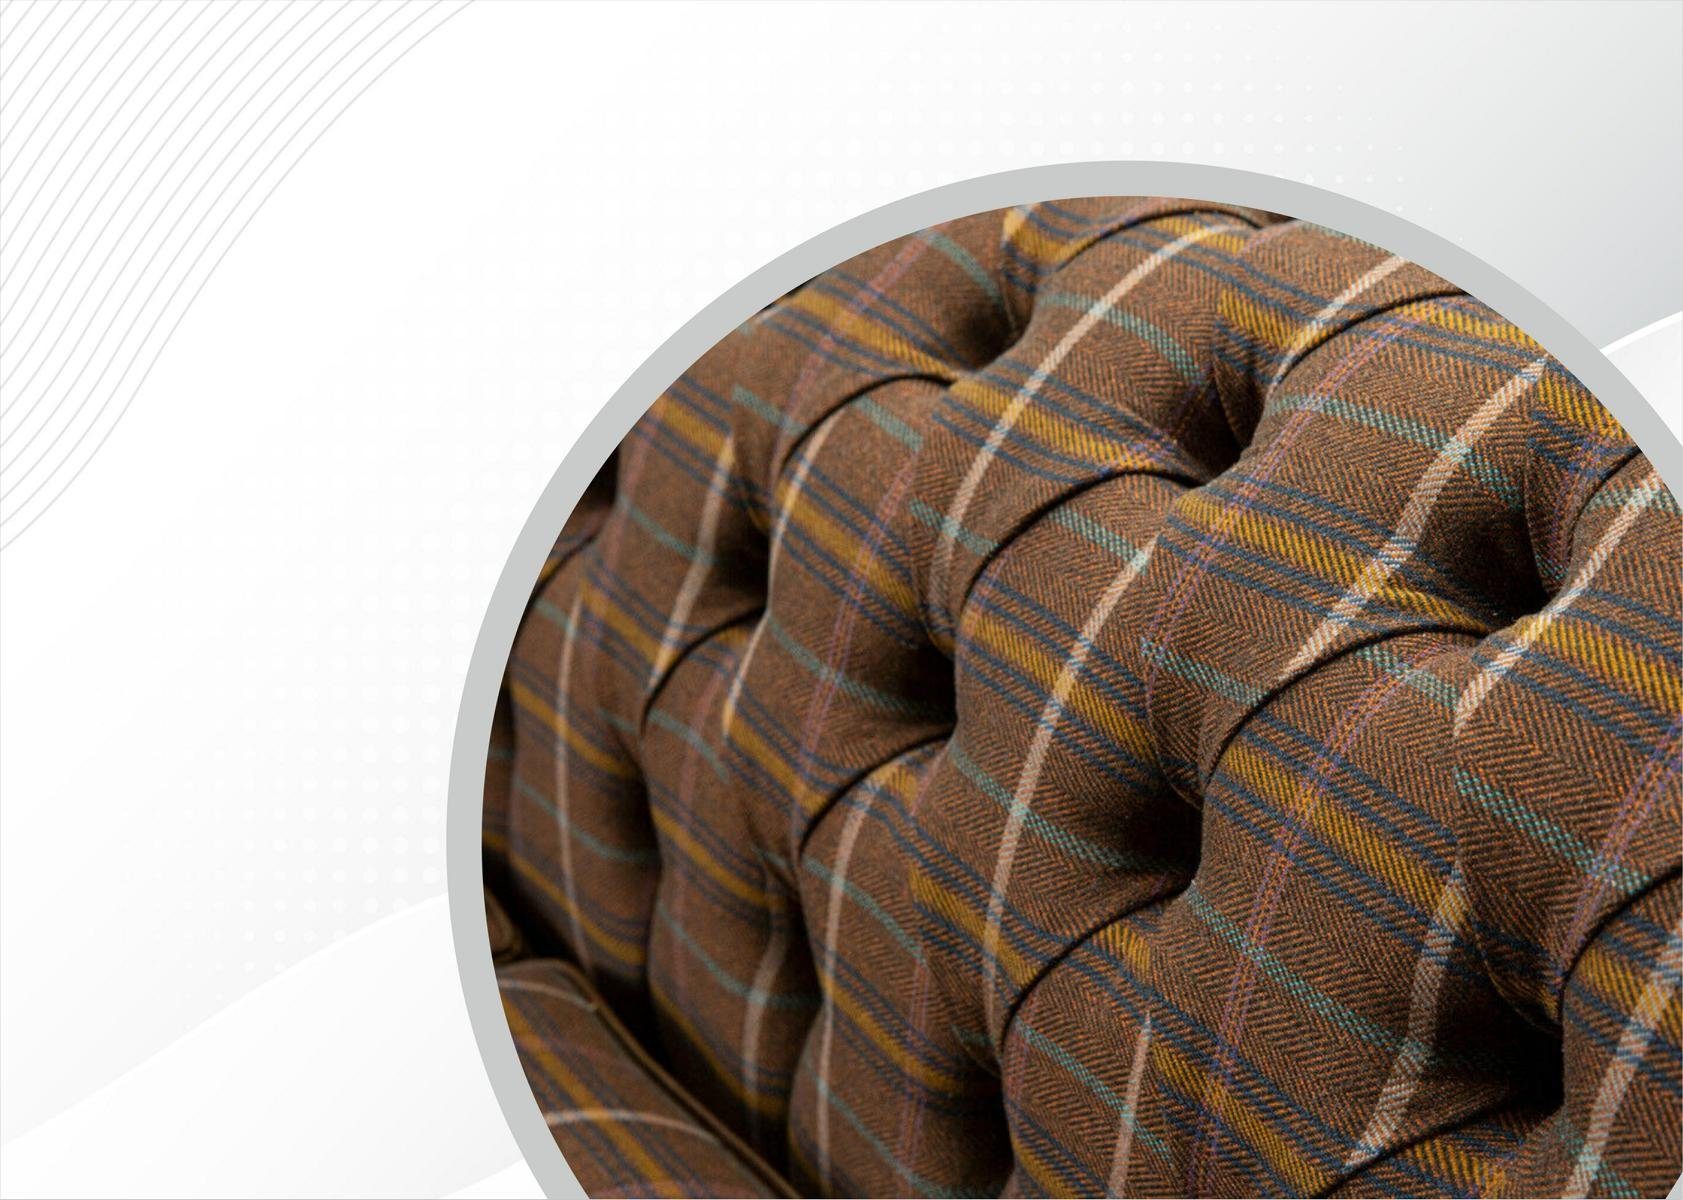 Chesterfield-Sofa, Design JVmoebel Couch 225 Chesterfield 3 Sitzer Sofa cm